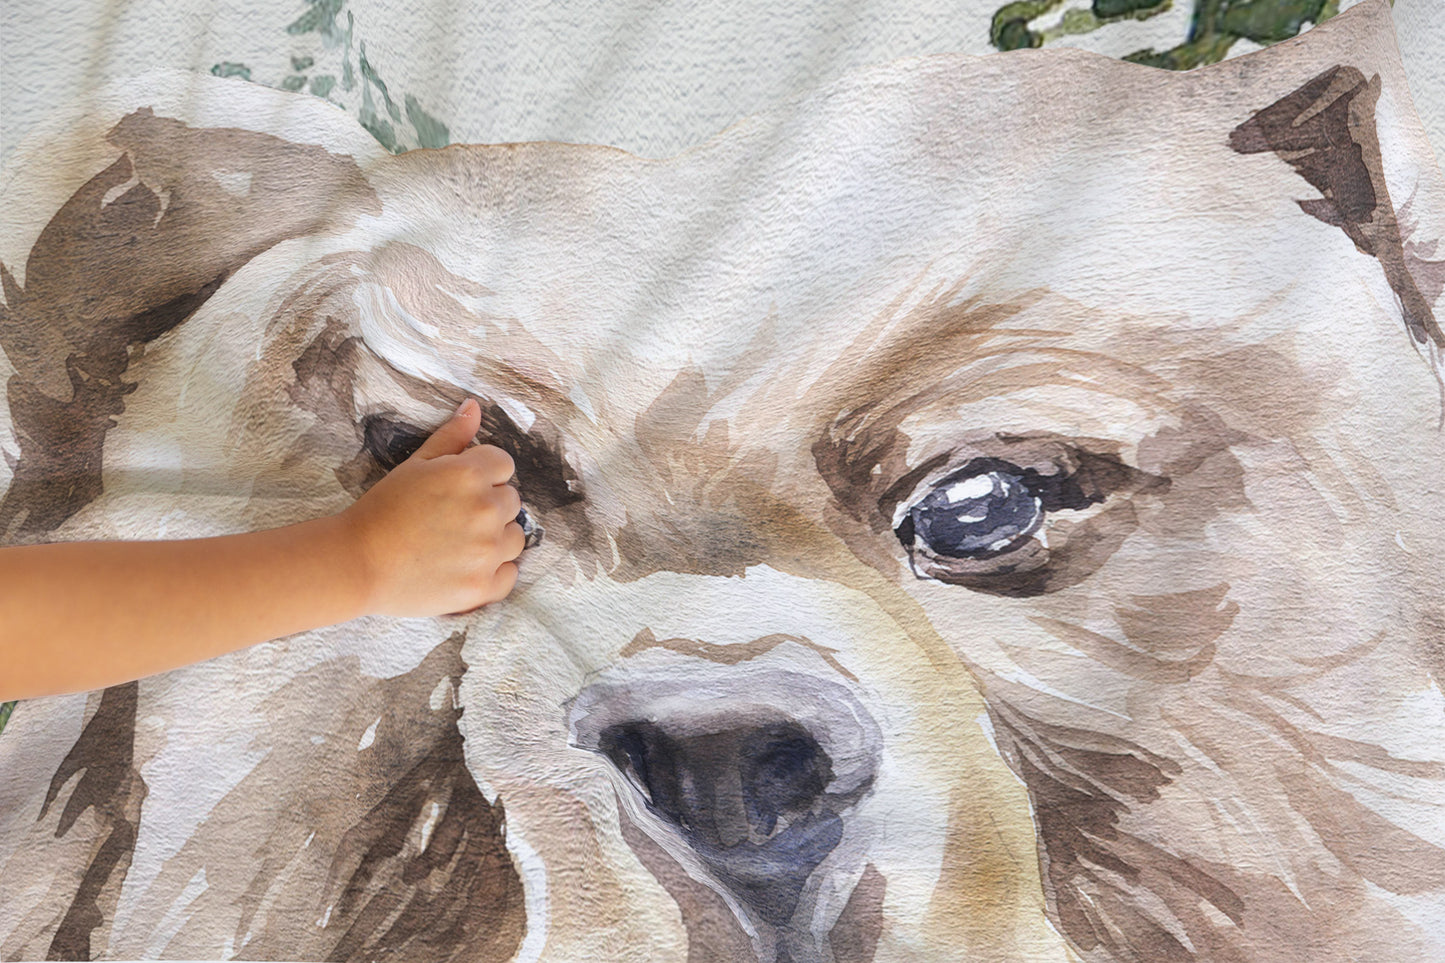 Be Brave Bear Minky Blanket, Woodland Nursery Bedding - Wild Woodland